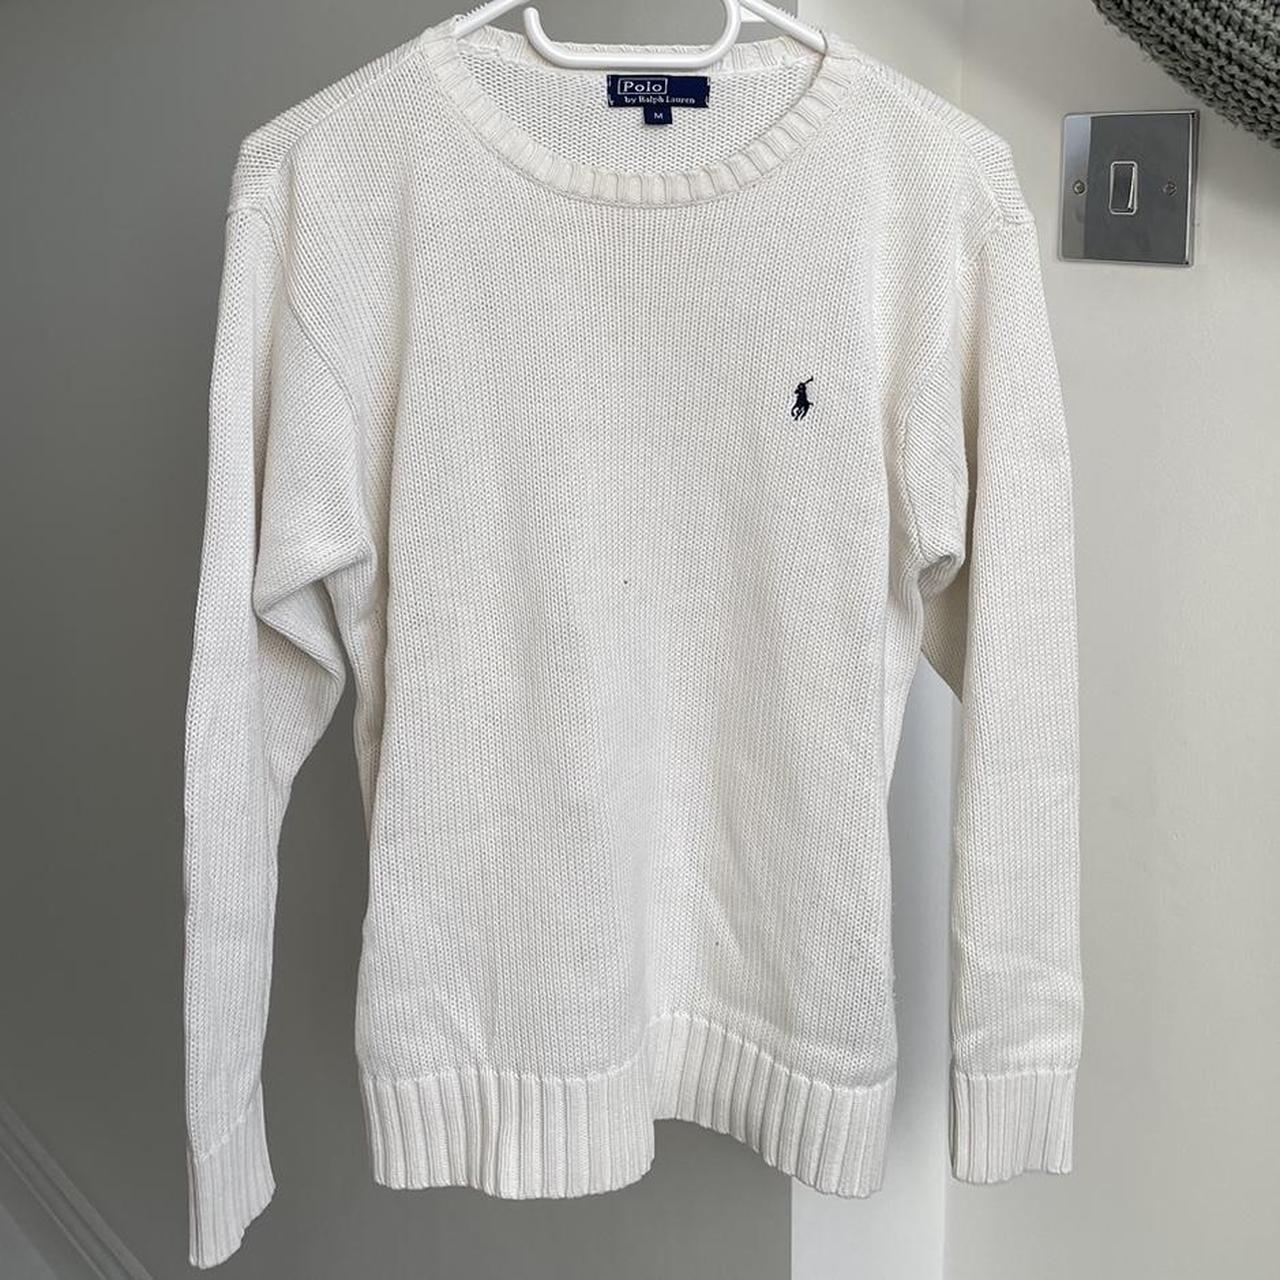 Vintage 2000s white Ralph Lauren knit sweater 🤍 Size... - Depop